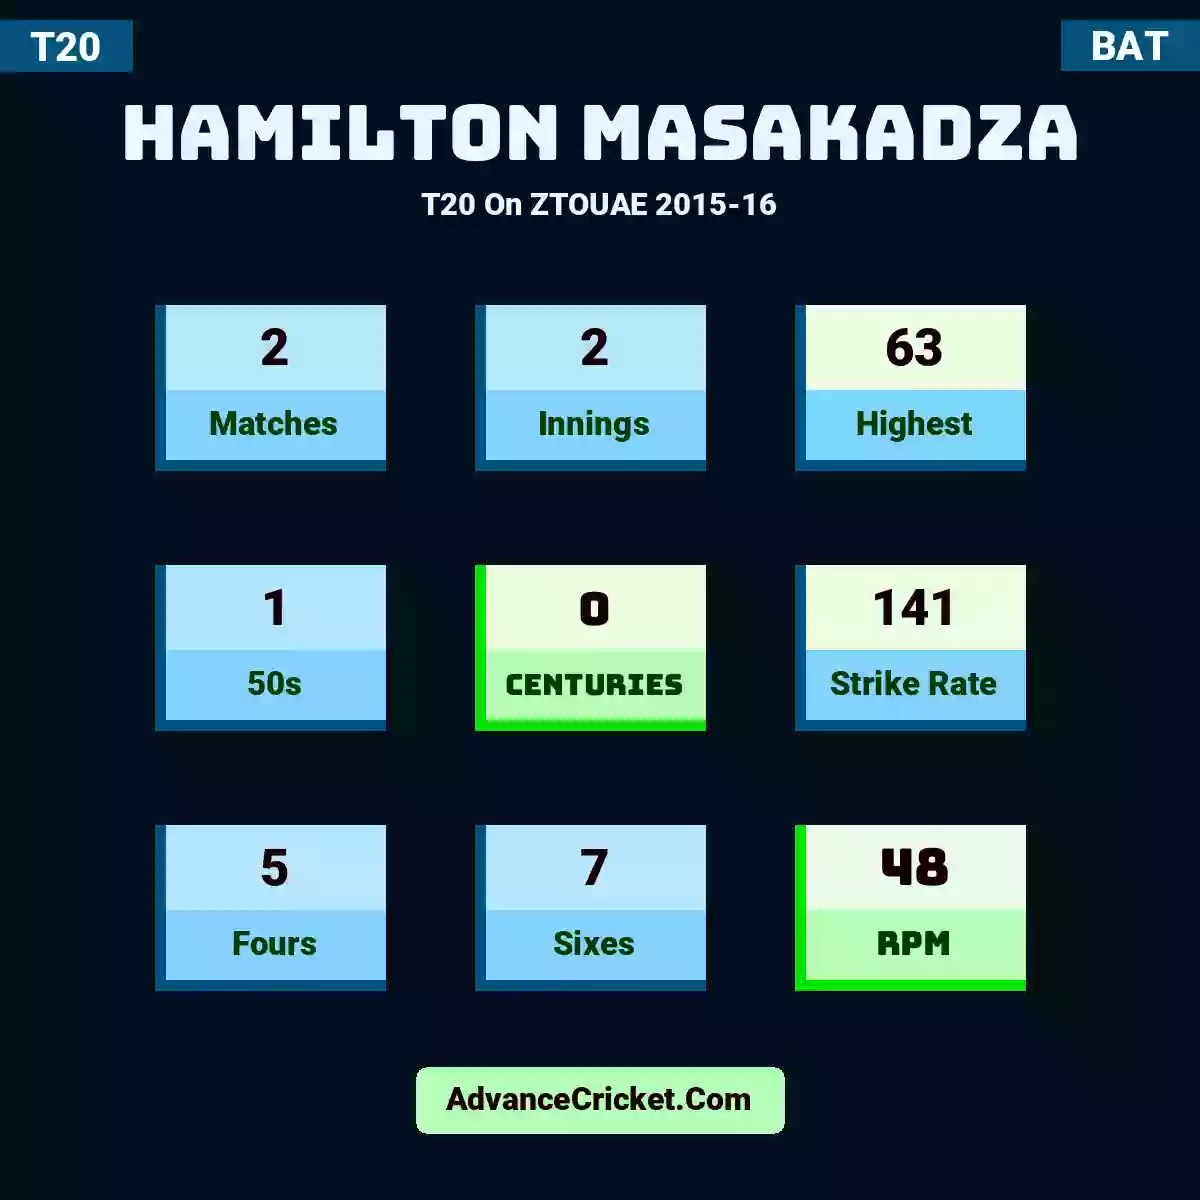 Hamilton Masakadza T20  On ZTOUAE 2015-16, Hamilton Masakadza played 2 matches, scored 63 runs as highest, 1 half-centuries, and 0 centuries, with a strike rate of 141. H.Masakadza hit 5 fours and 7 sixes, with an RPM of 48.